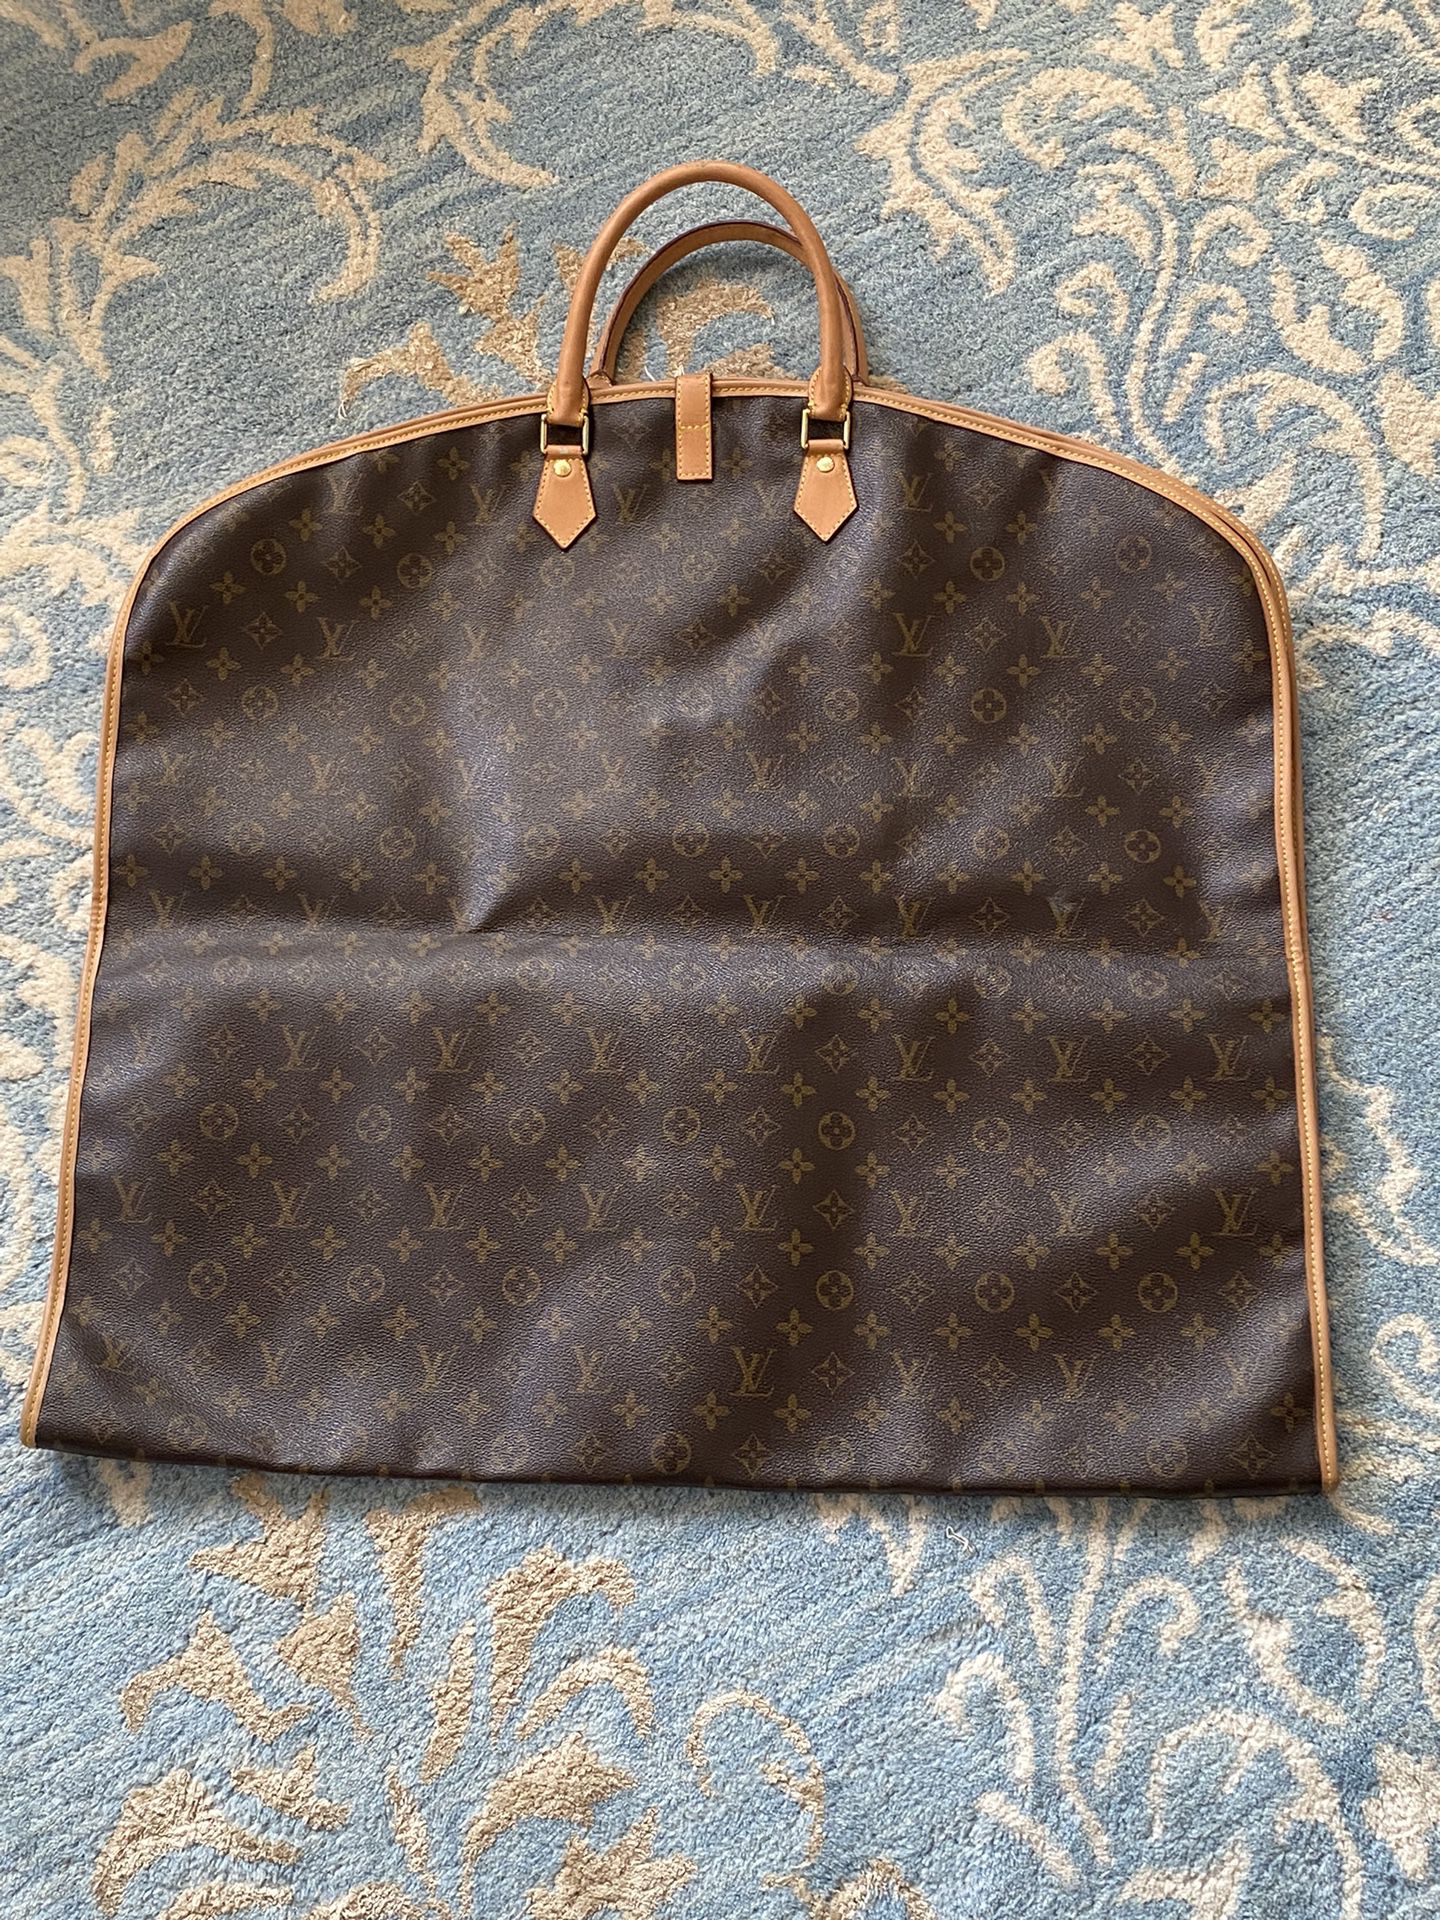 Luggage Garment Bag $40